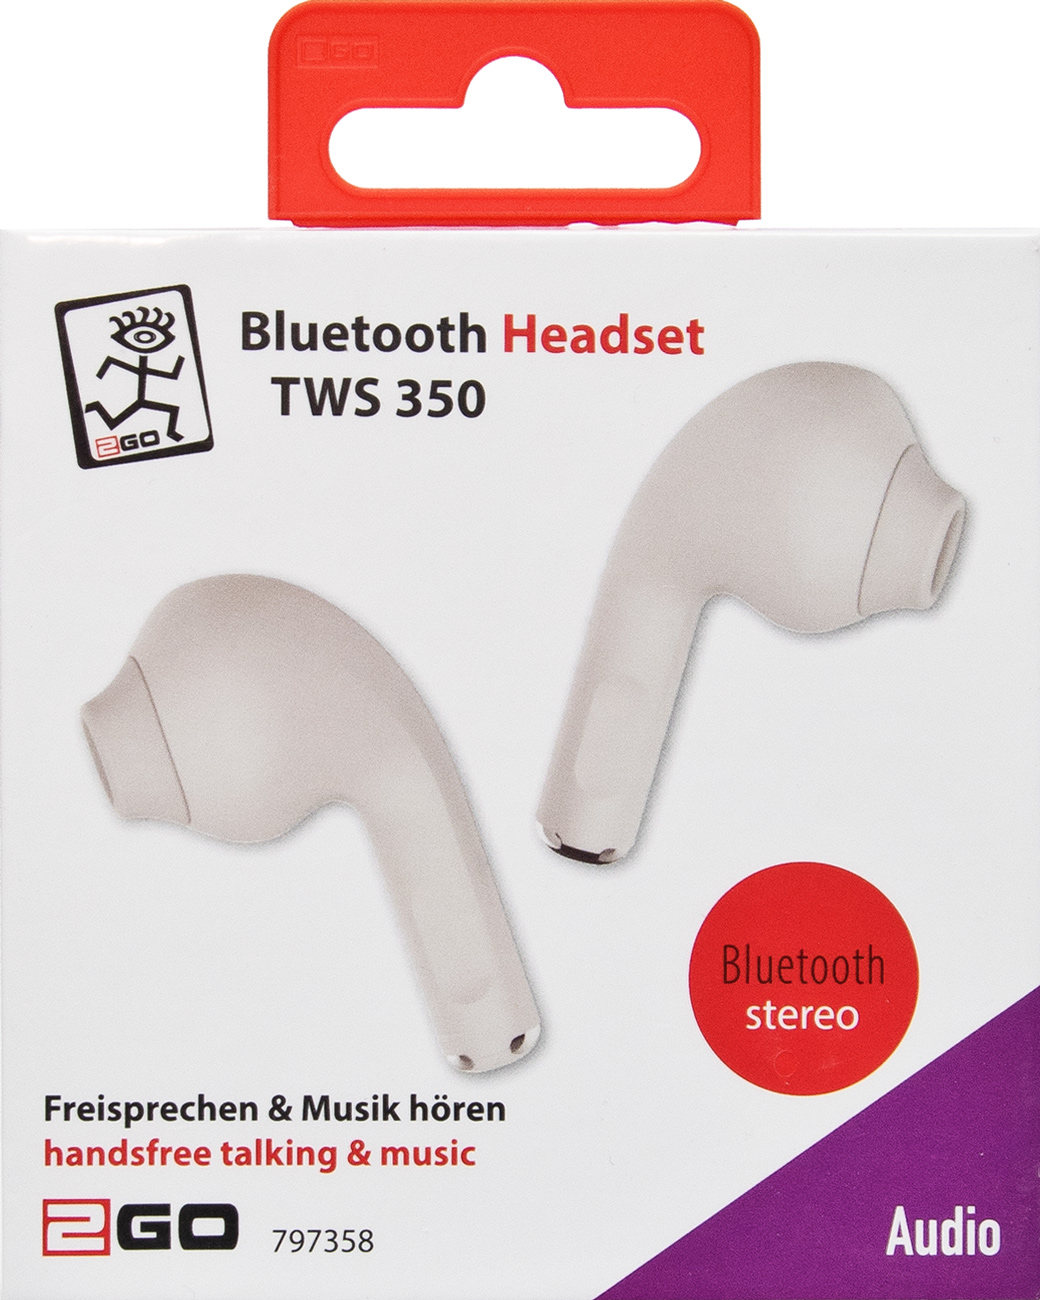 2GO Bluetooth Headset TWS 350 weiss - 797358